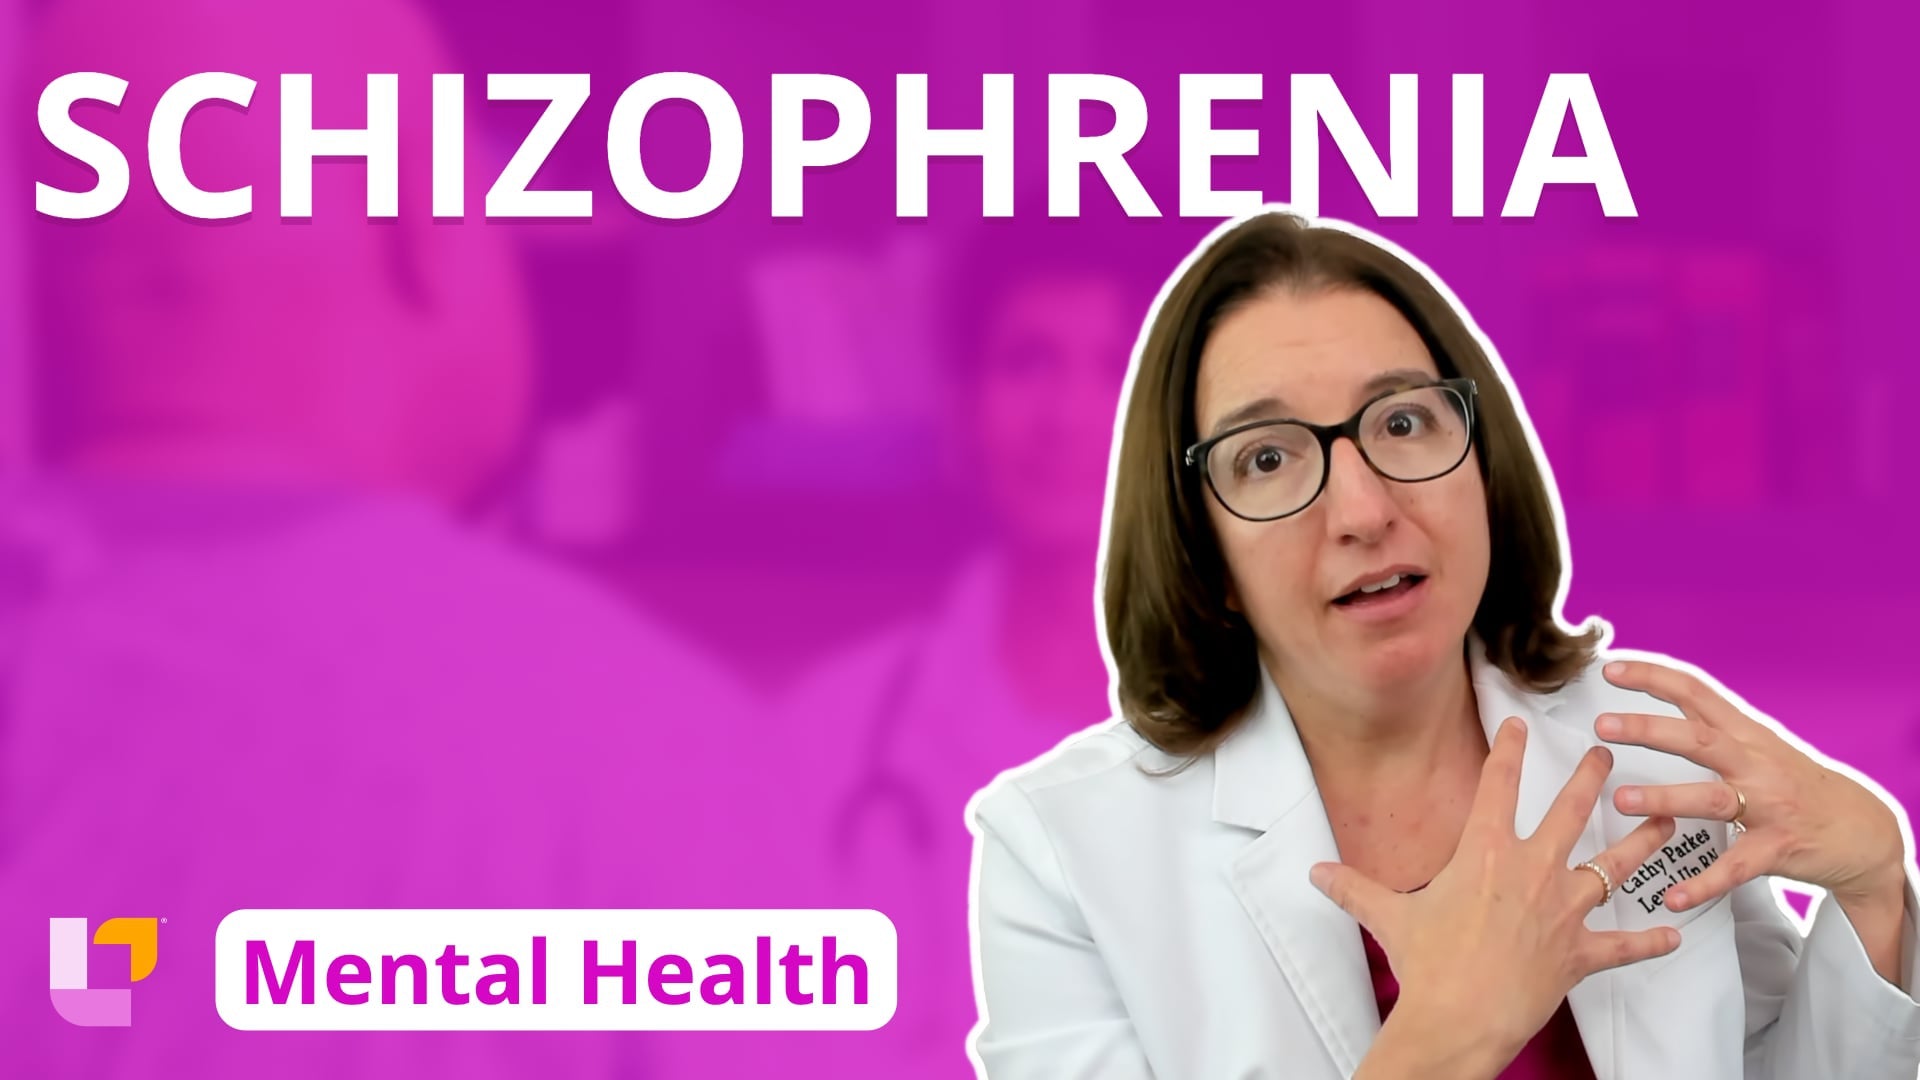 Psychiatric Mental Health, part 30: Disorders - Schizophrenia - LevelUpRN